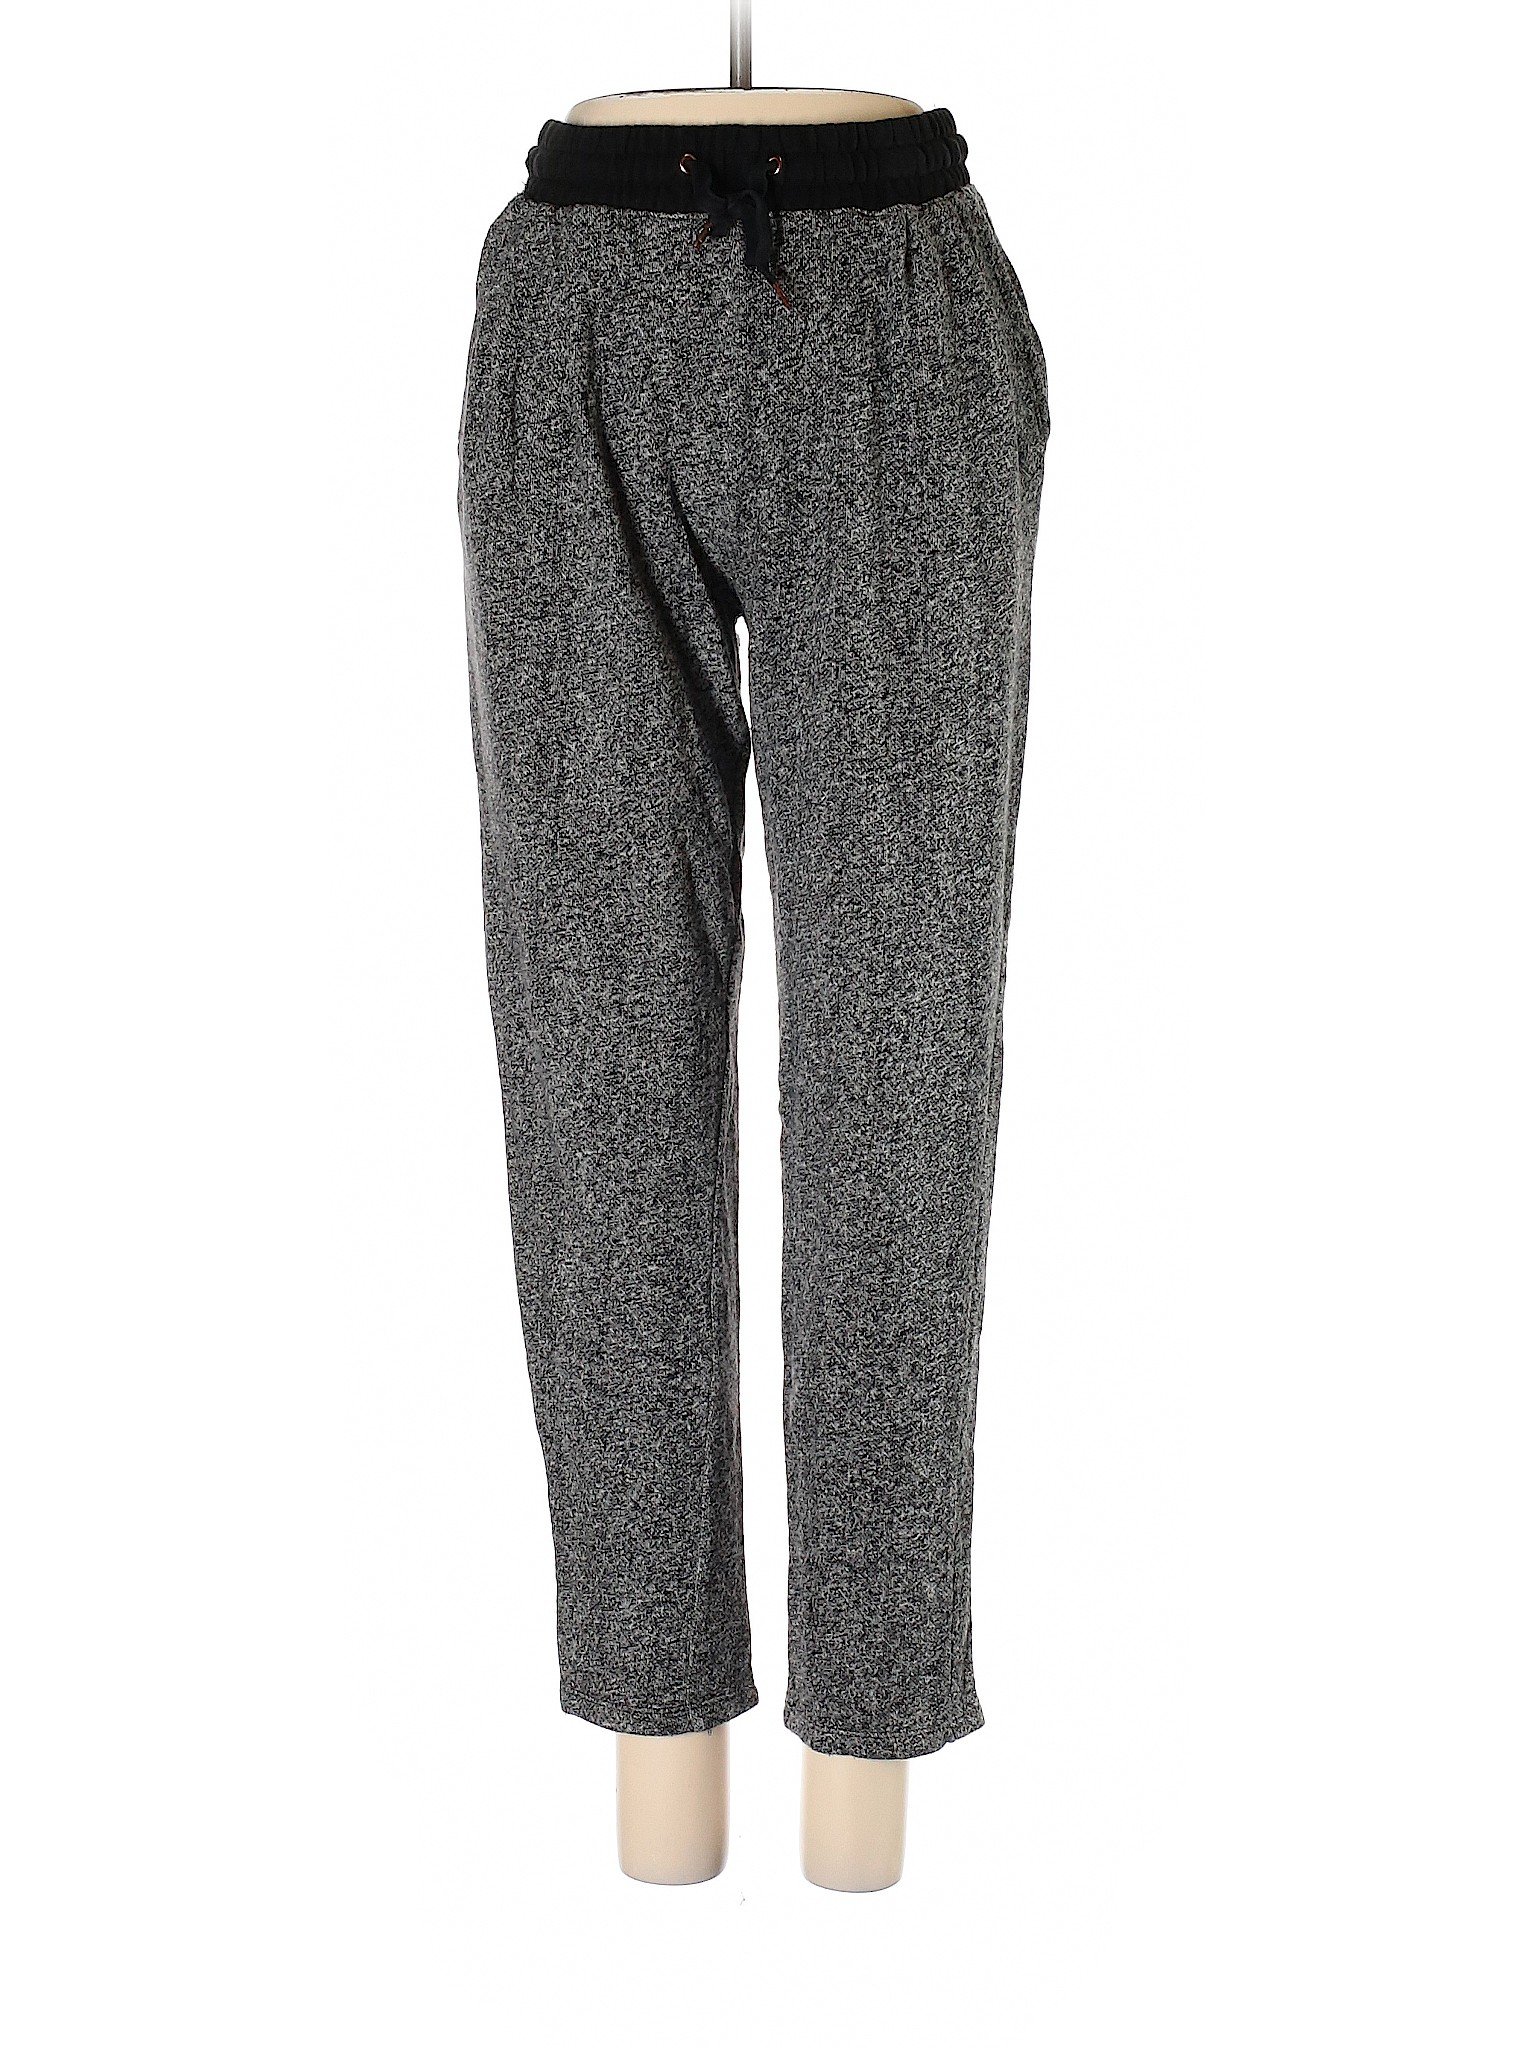 H&M Women Gray Sweatpants S | eBay